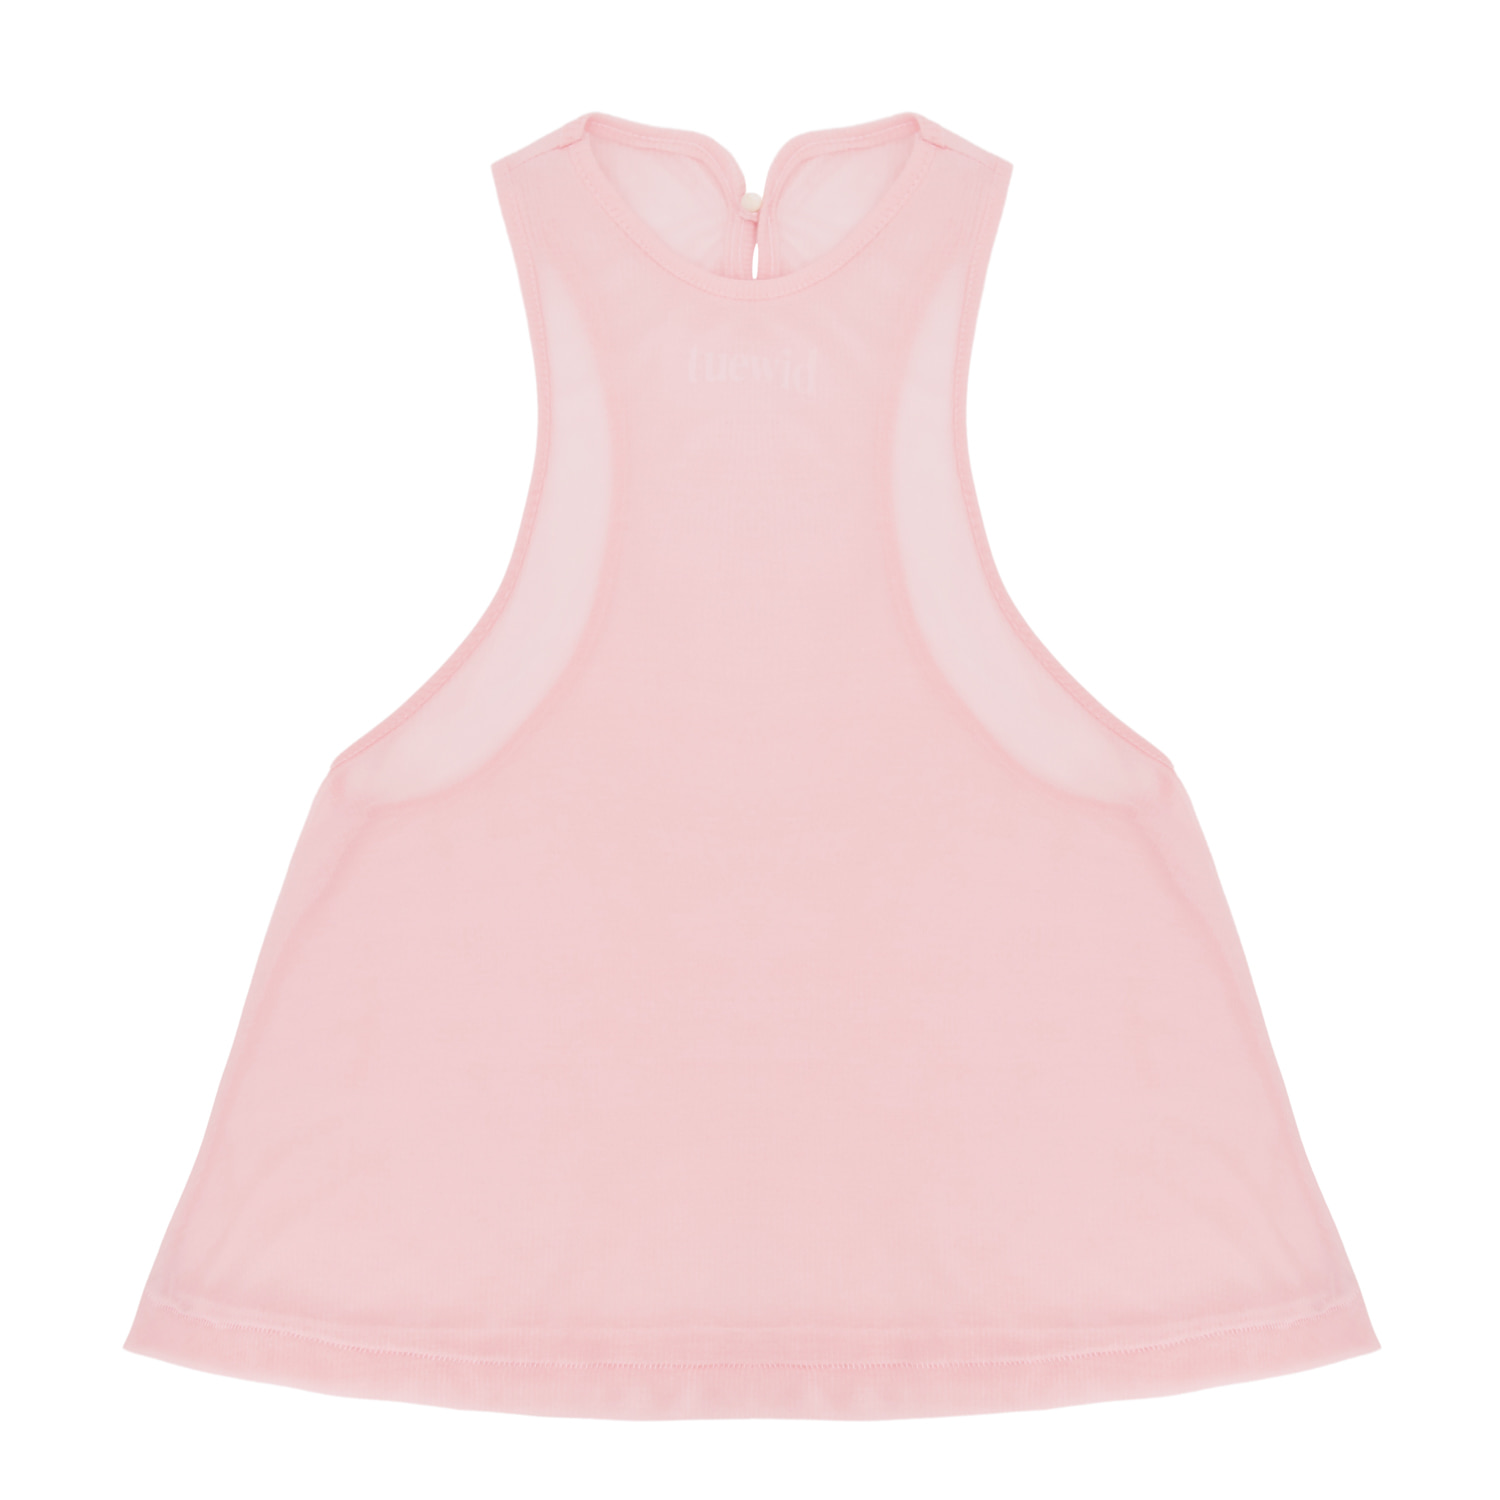 Tuewid classic sleeveless in sleek Powder Pink